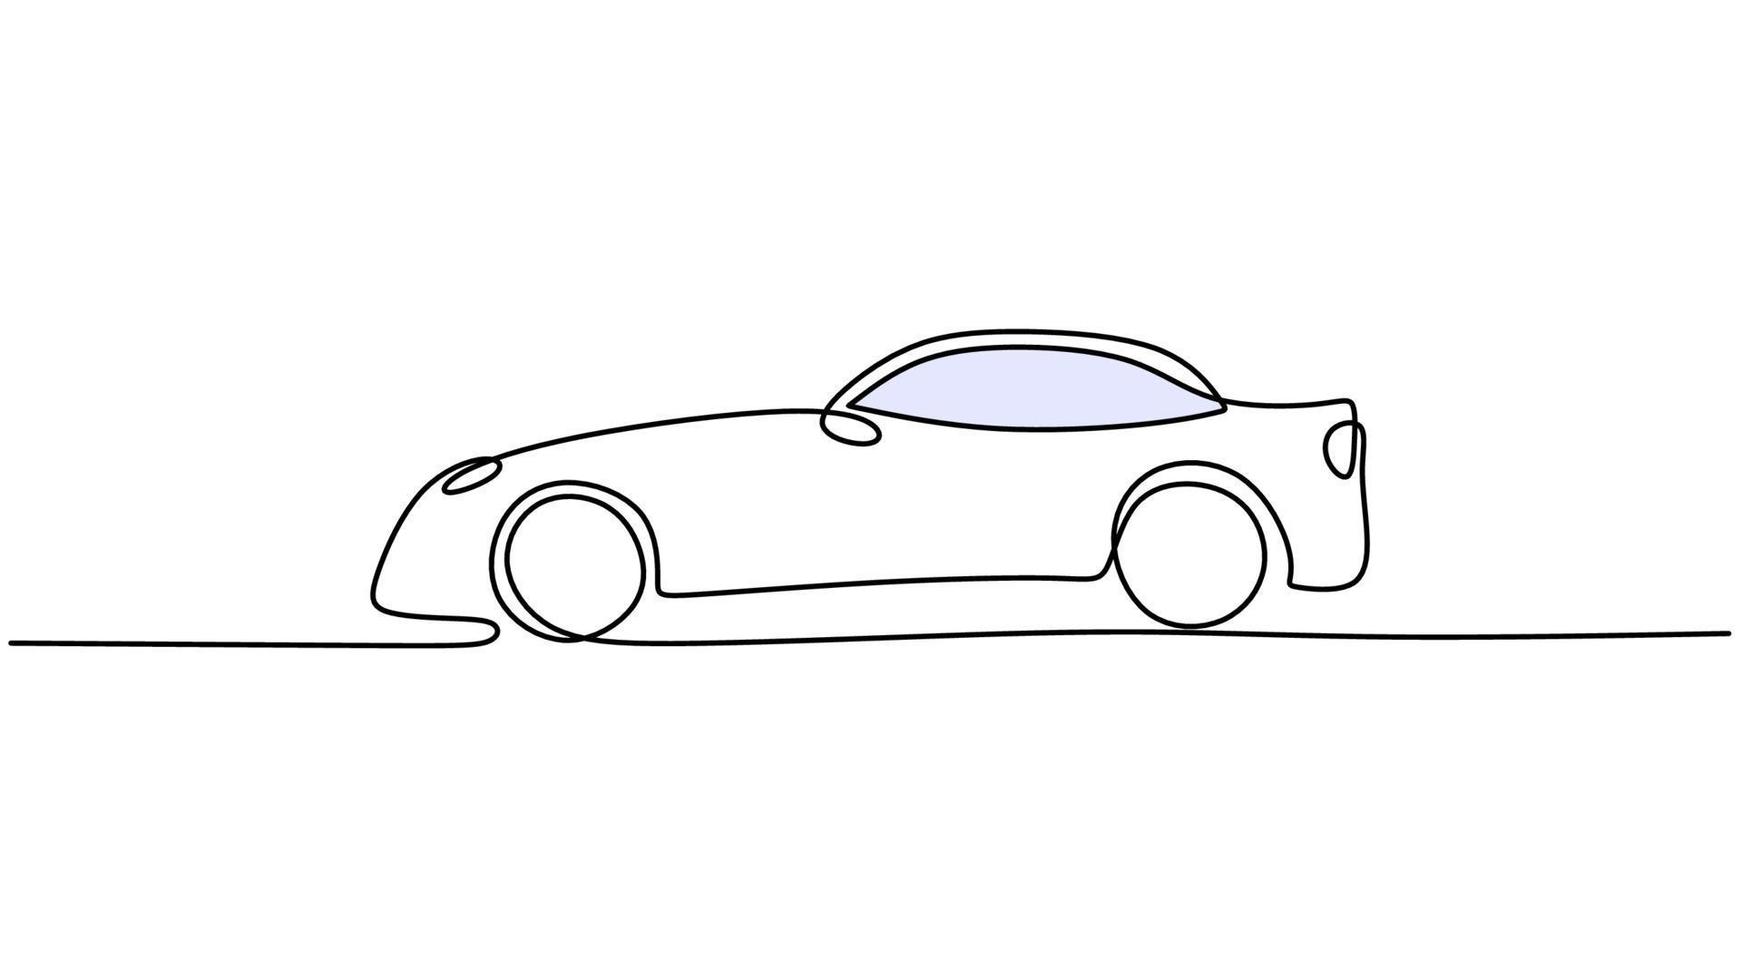 ett linje teckning av sport bil isolerat på vit bakgrund. kontinuerlig enda linje minimalism. vektor